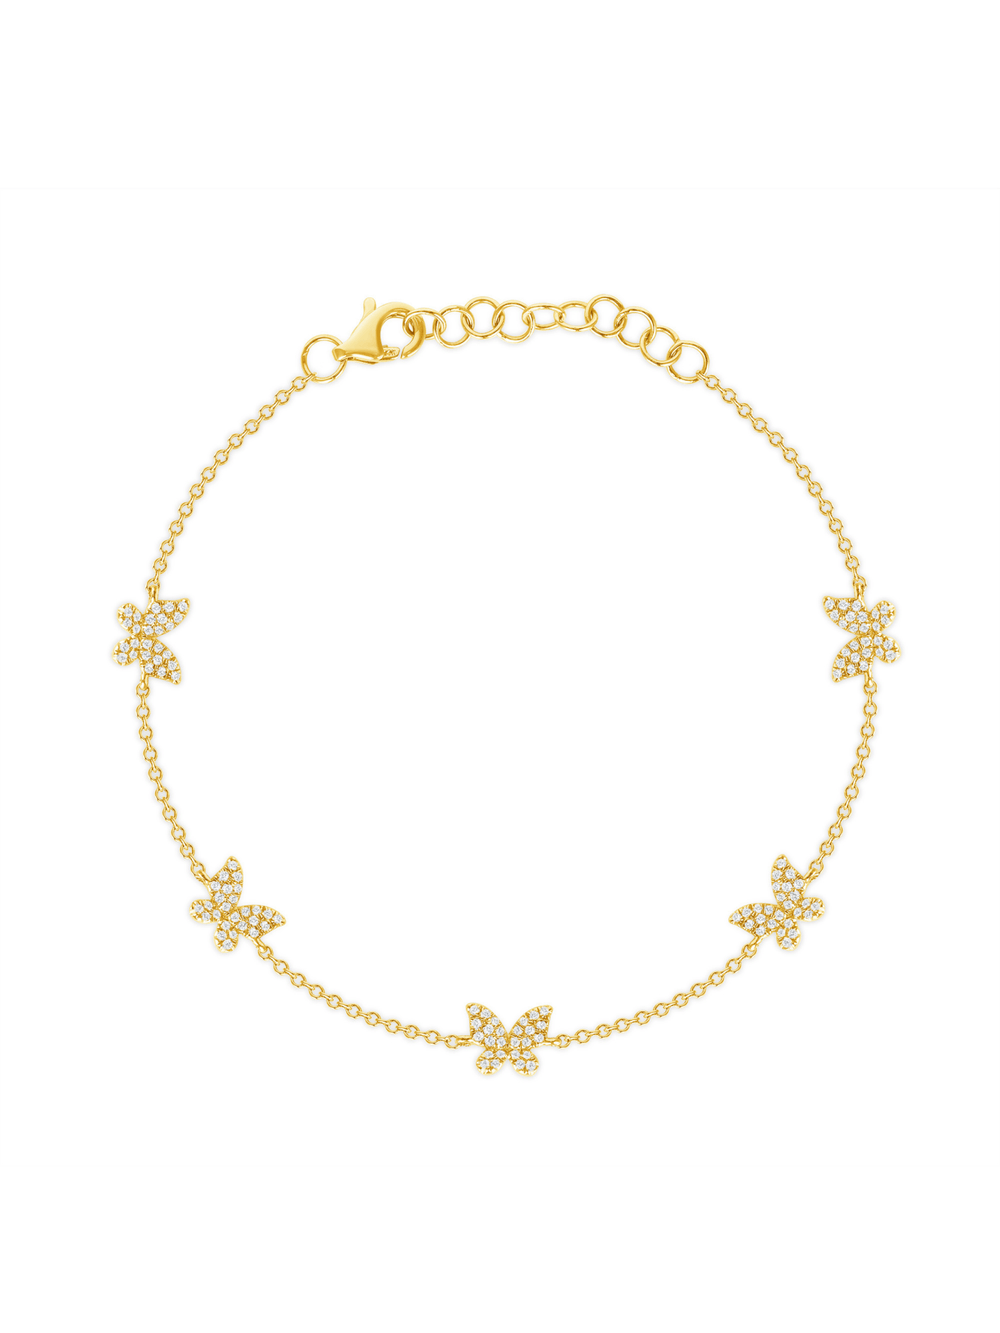 Petite Solid Gold Diamond Butterfly Bracelet, Monica